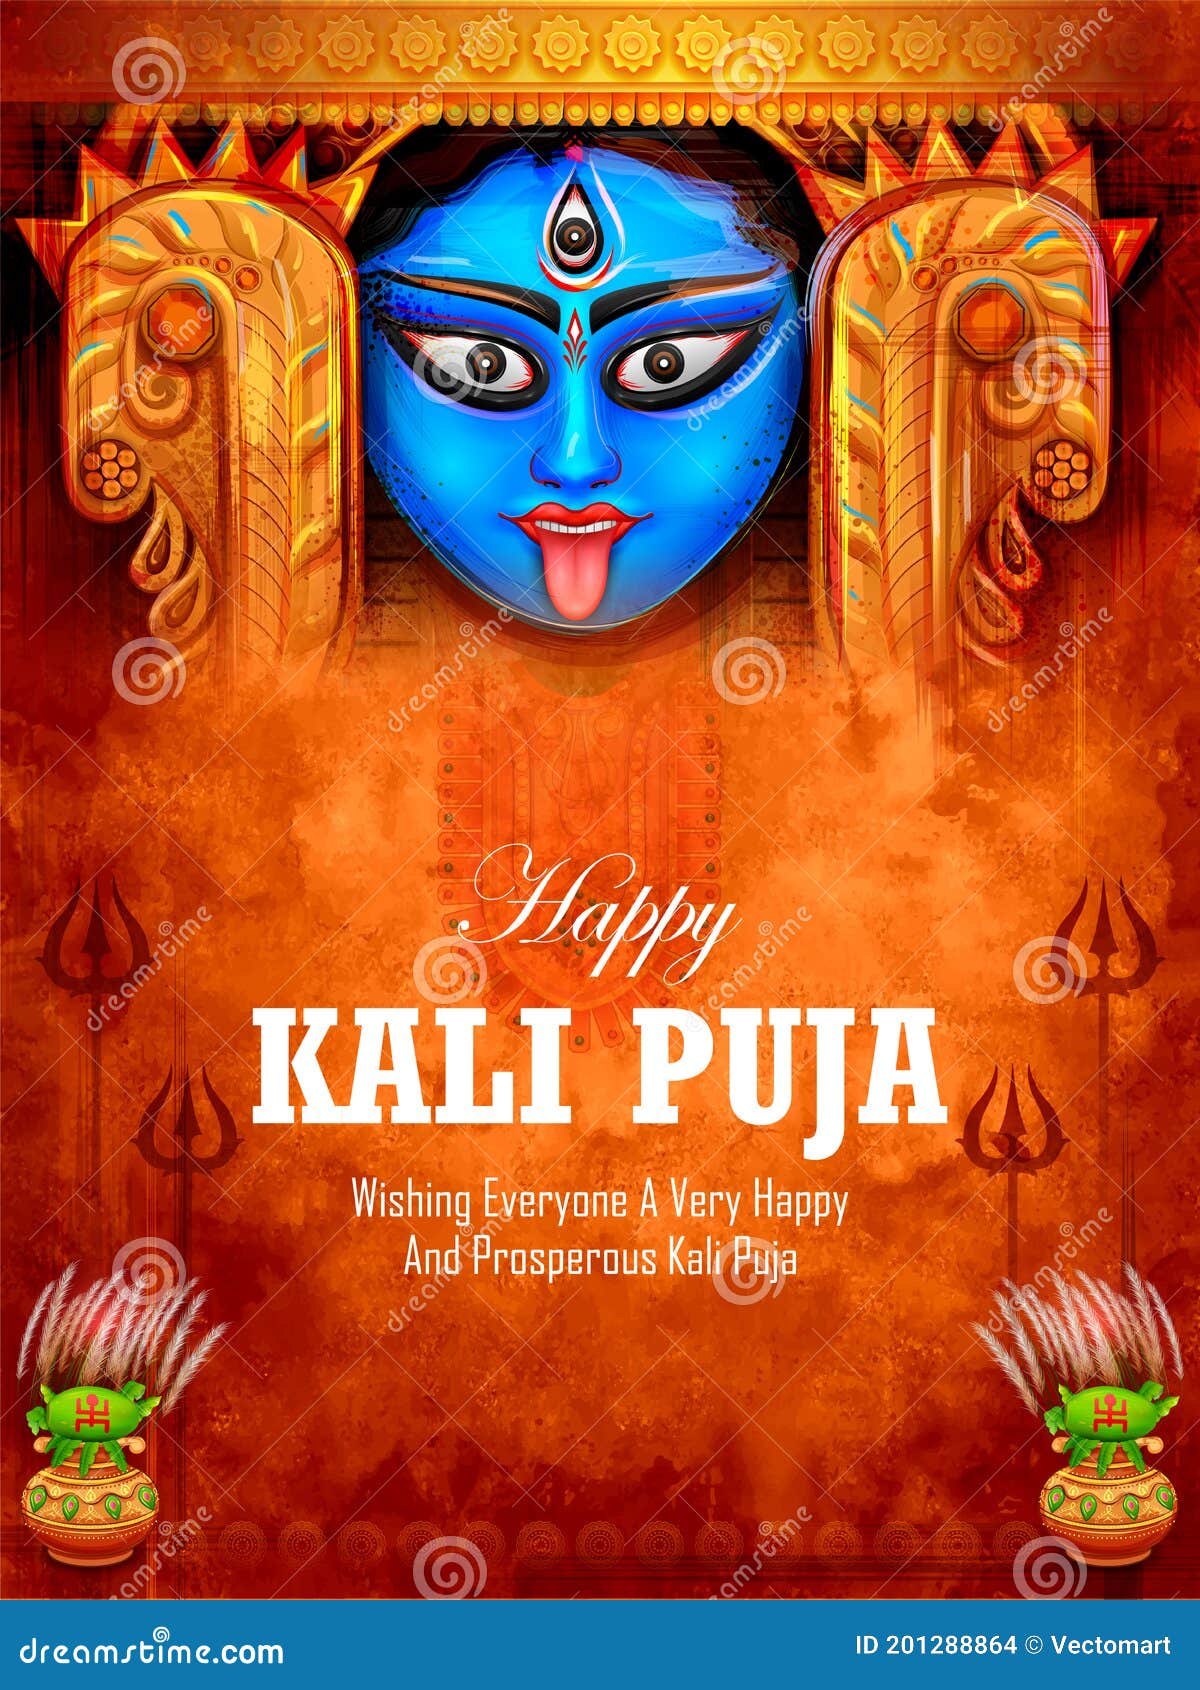 goddess kali maa on diwali kali pooja background of india festival